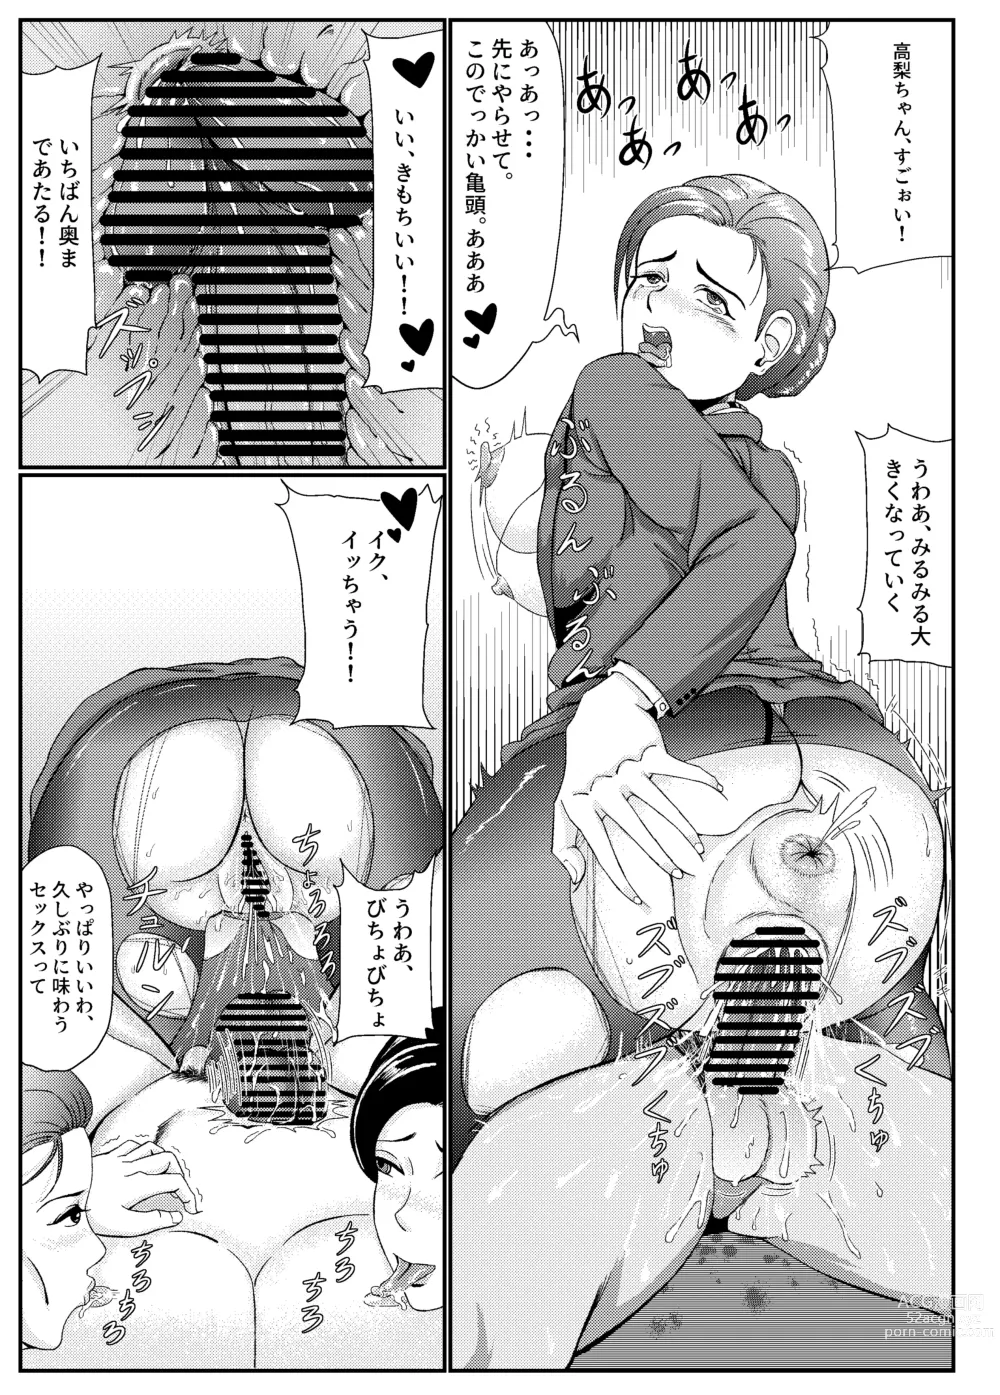 Page 114 of manga 隣のキャビンアテンダントお姉さん第1~5話